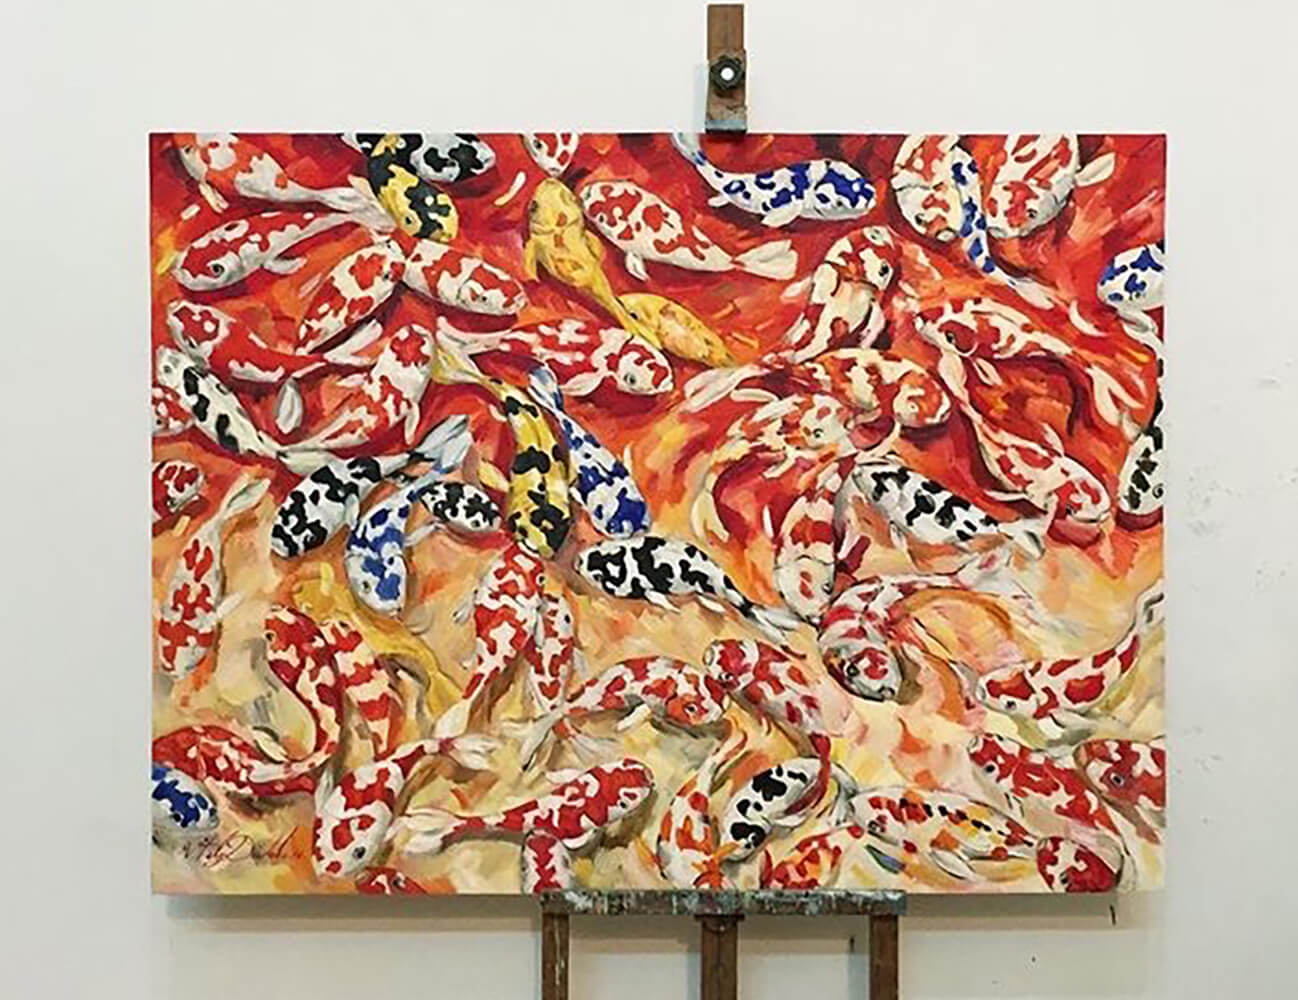 Buy painting online Singapore Koi Fish Vitaly Didenko Turkmenistan Exquisite Art